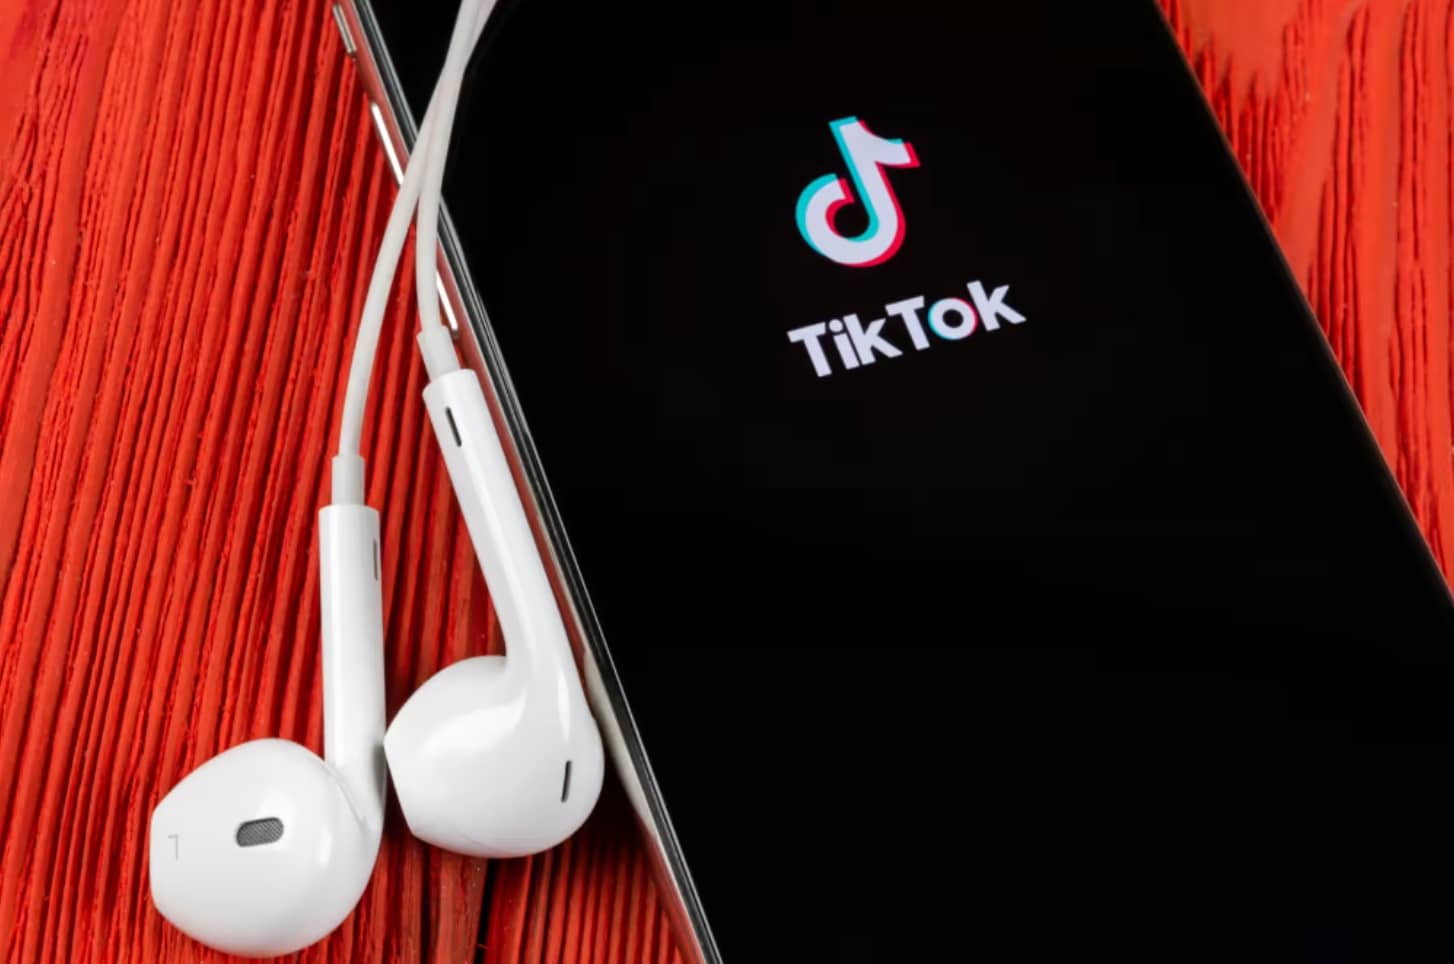 How to Change Voice on Tiktok